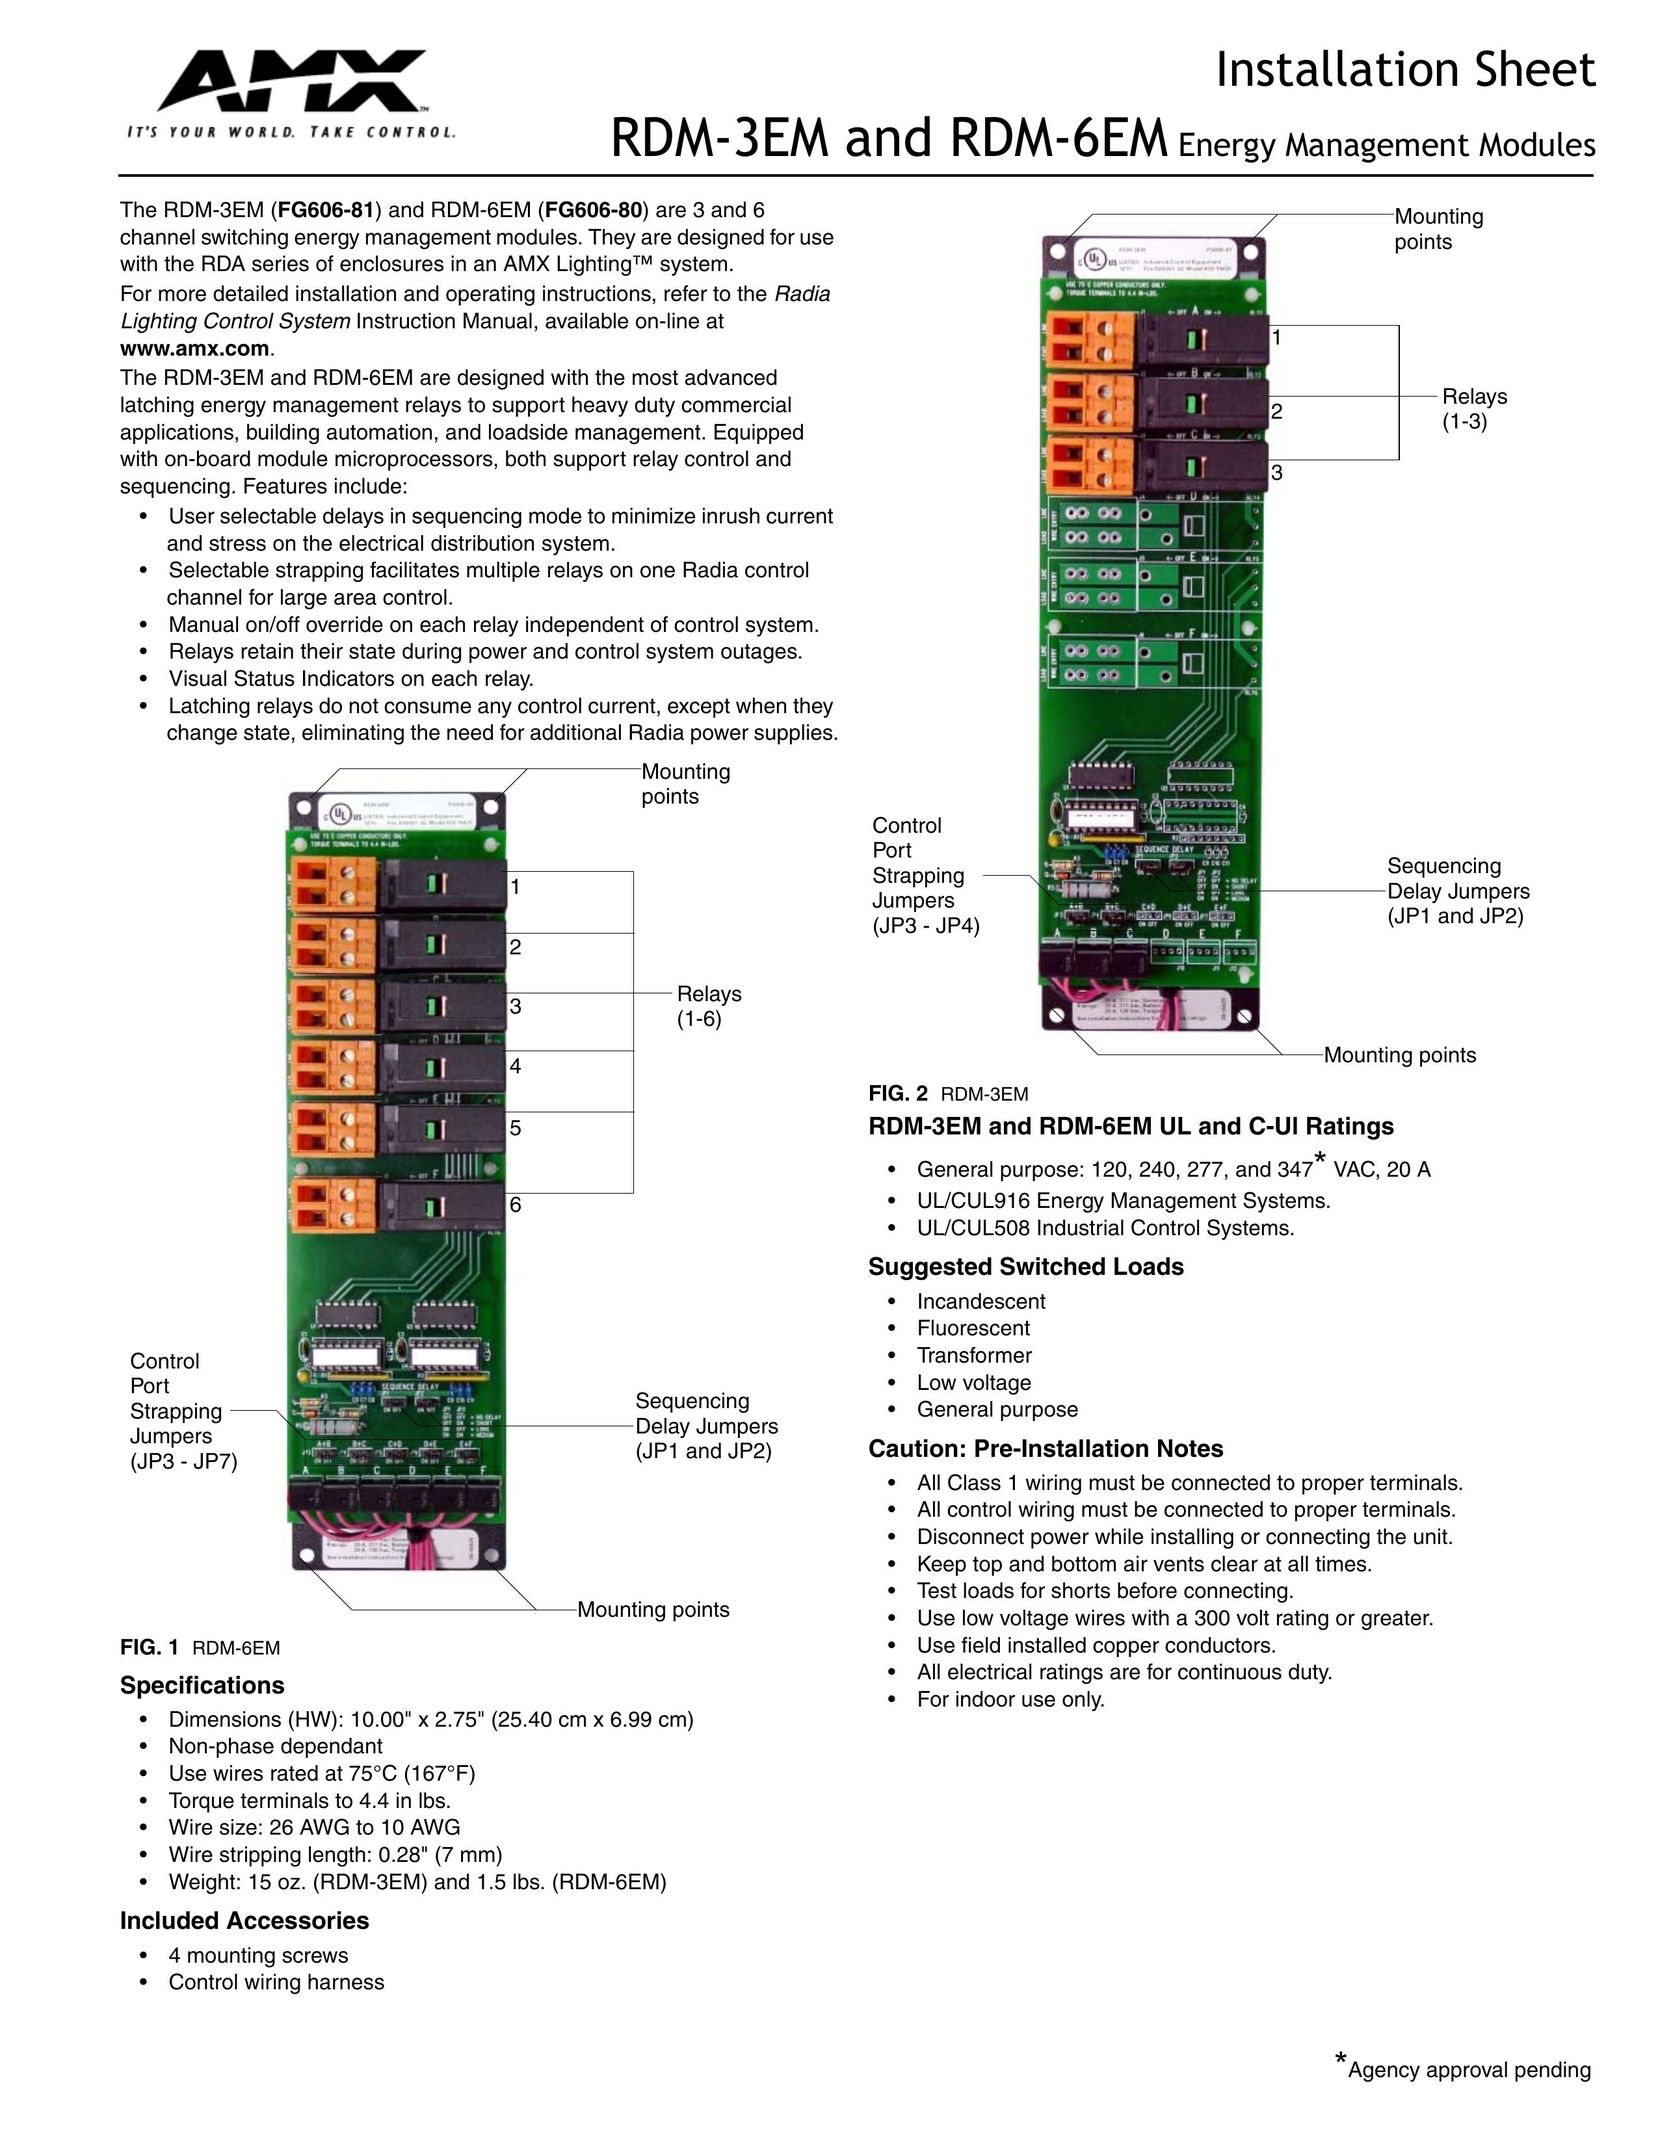 AMX RDM-3EM Switch User Manual